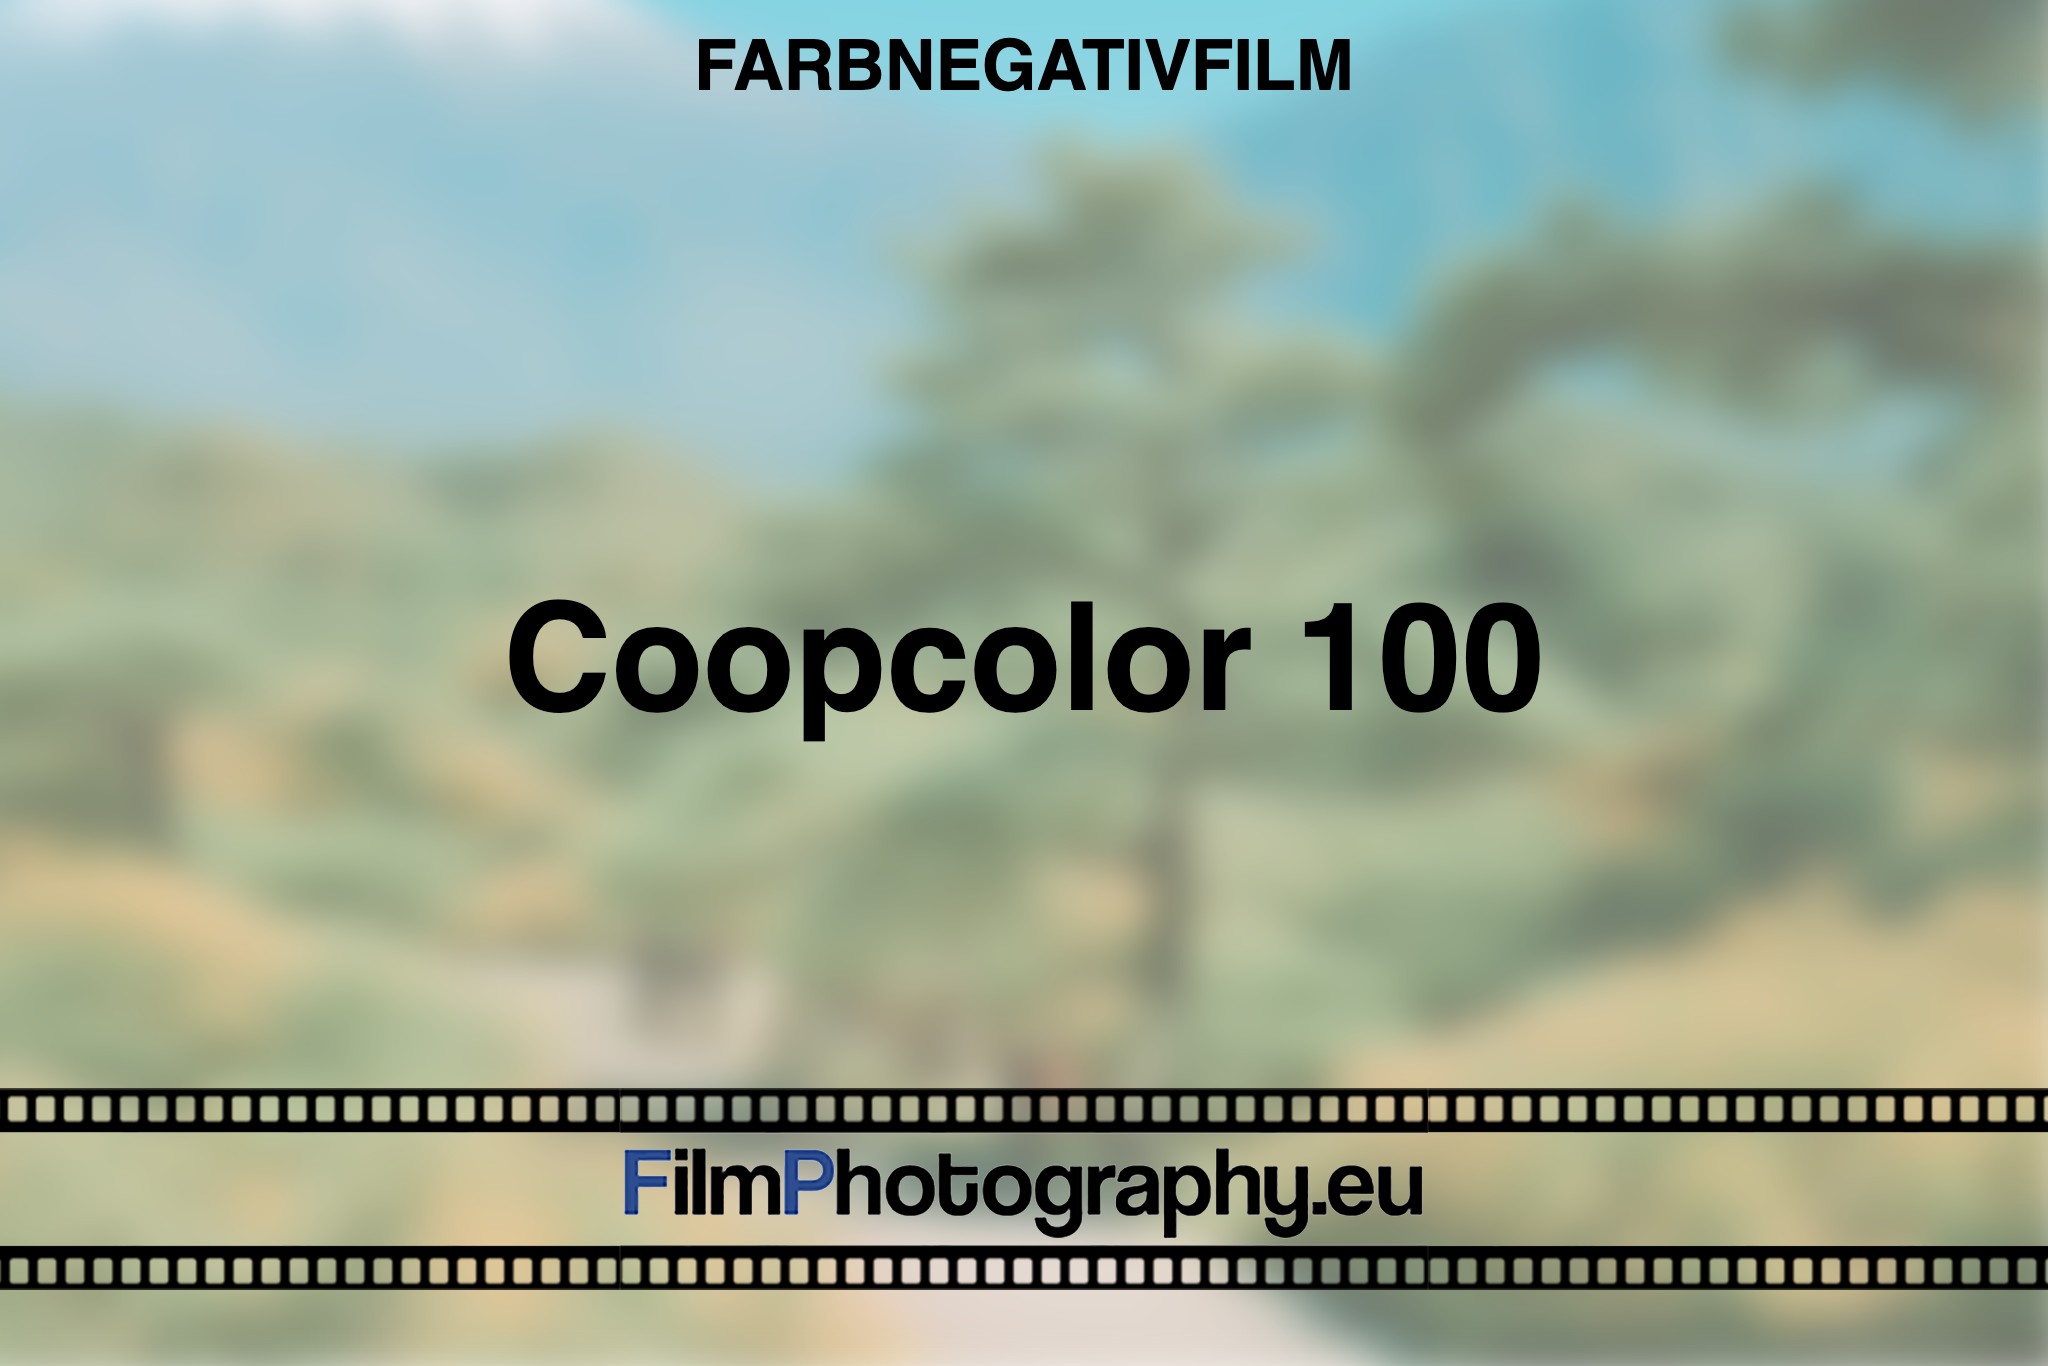 coopcolor-100-farbnegativfilm-bnv